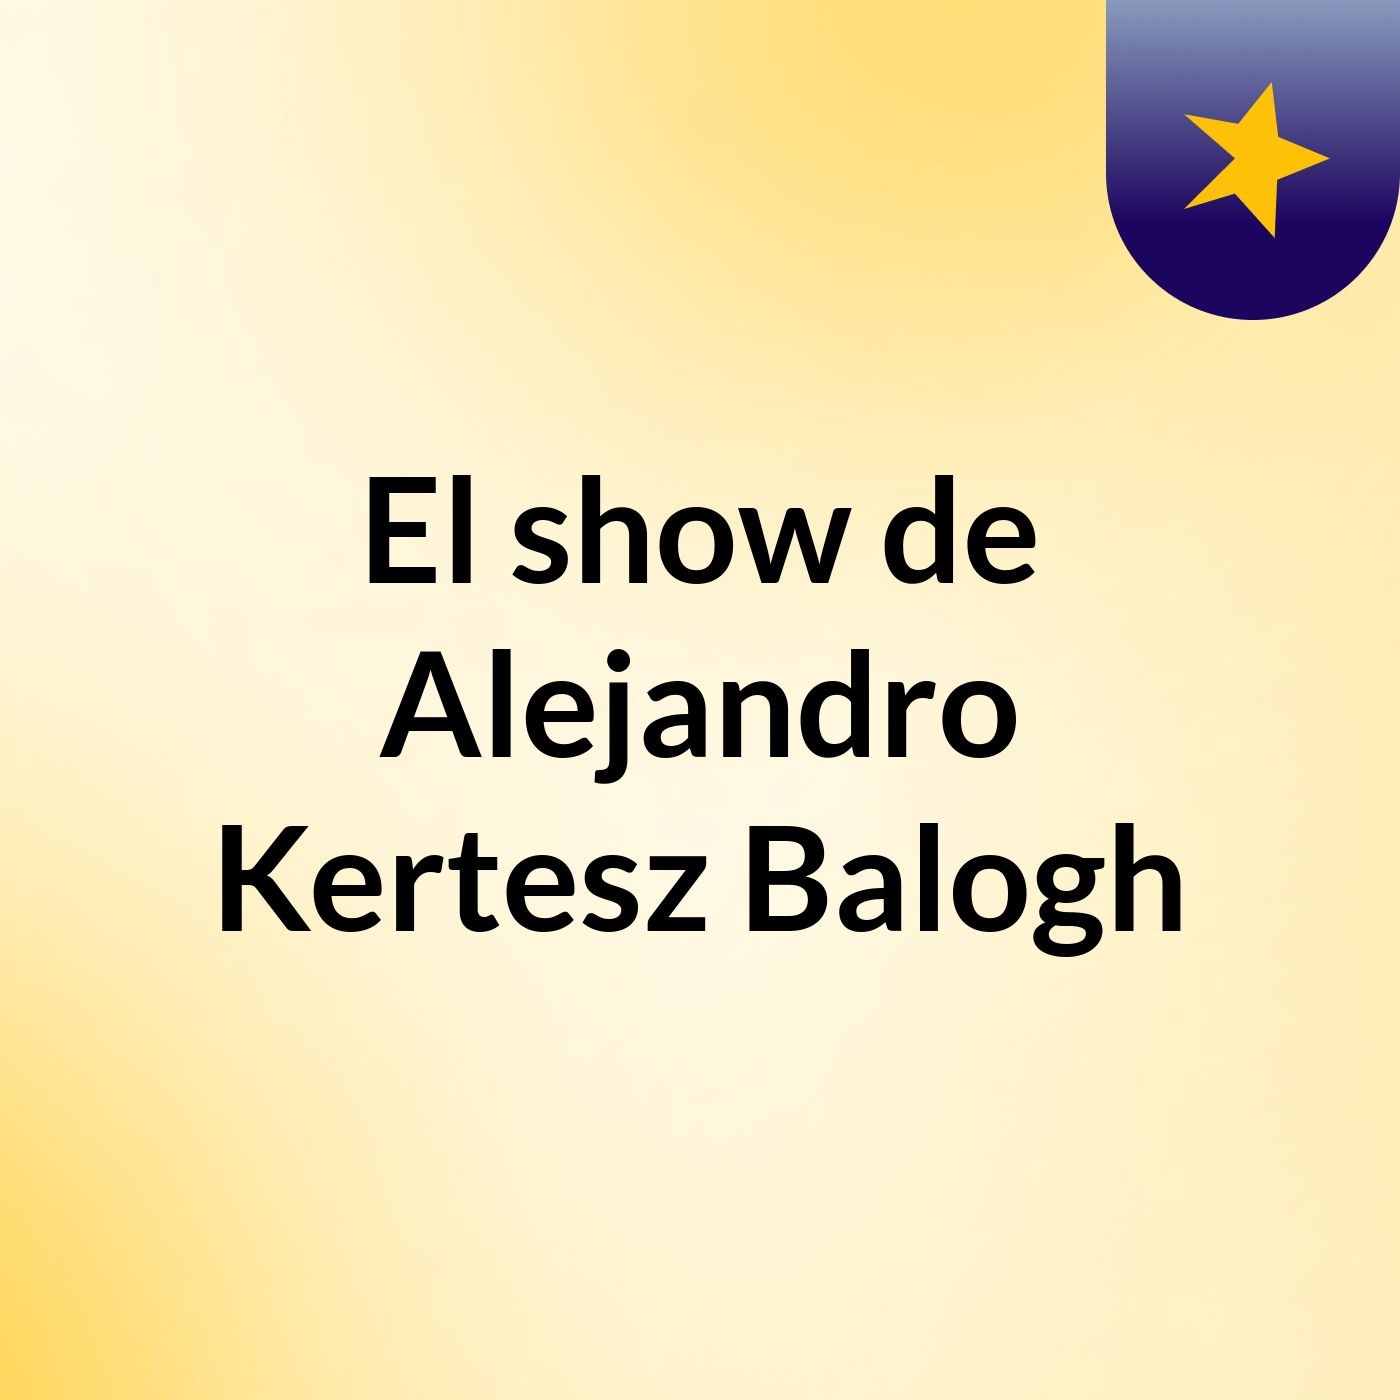 El show de Alejandro Kertesz Balogh